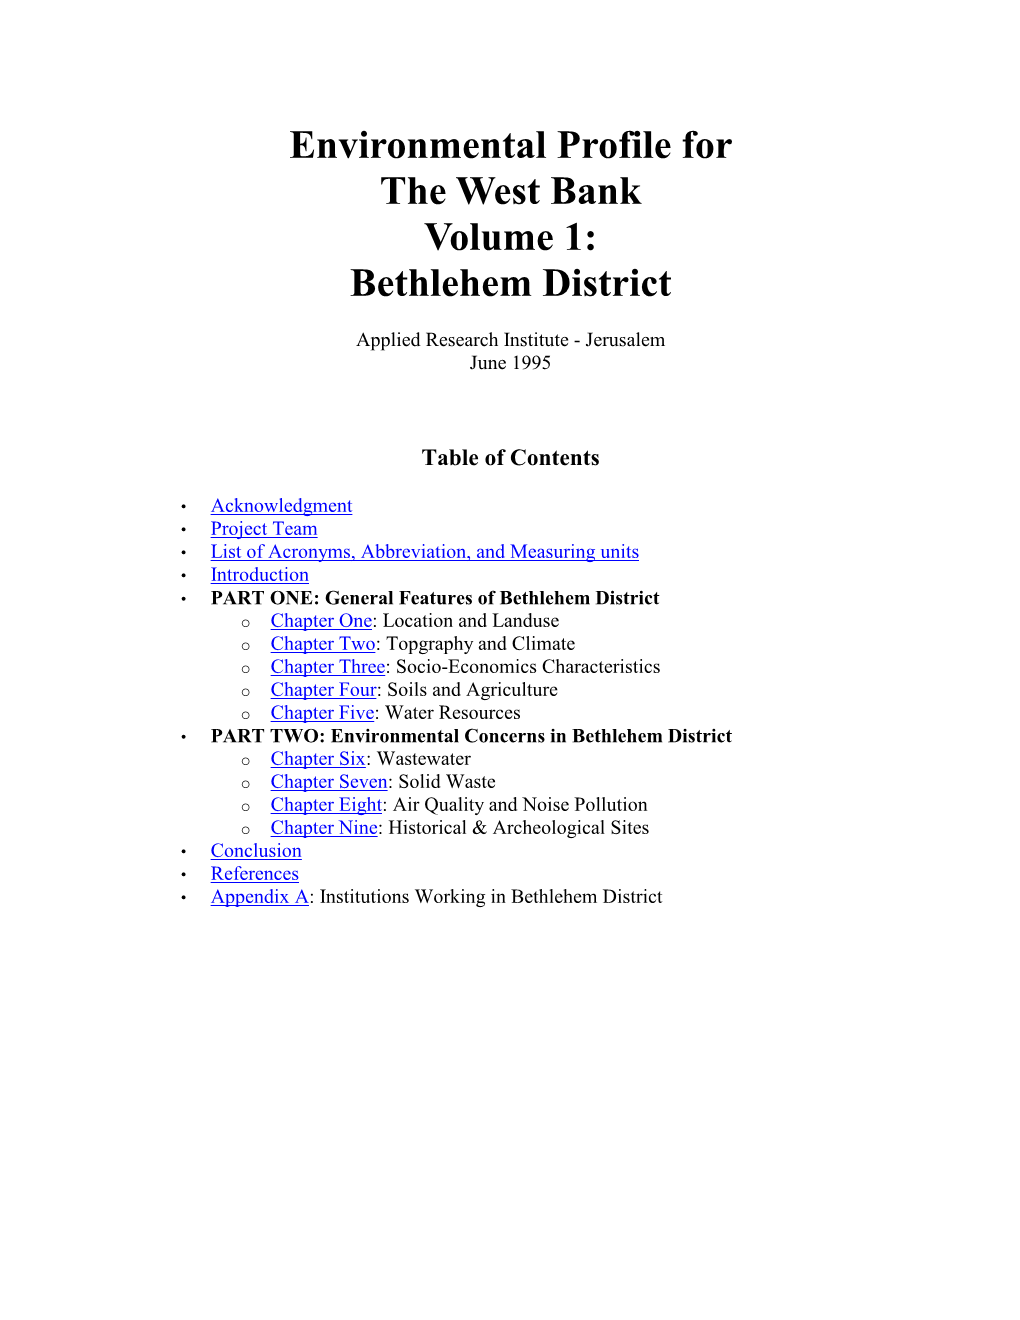 Environmental Profile for the West Bank Volume 1: Bethlehem District